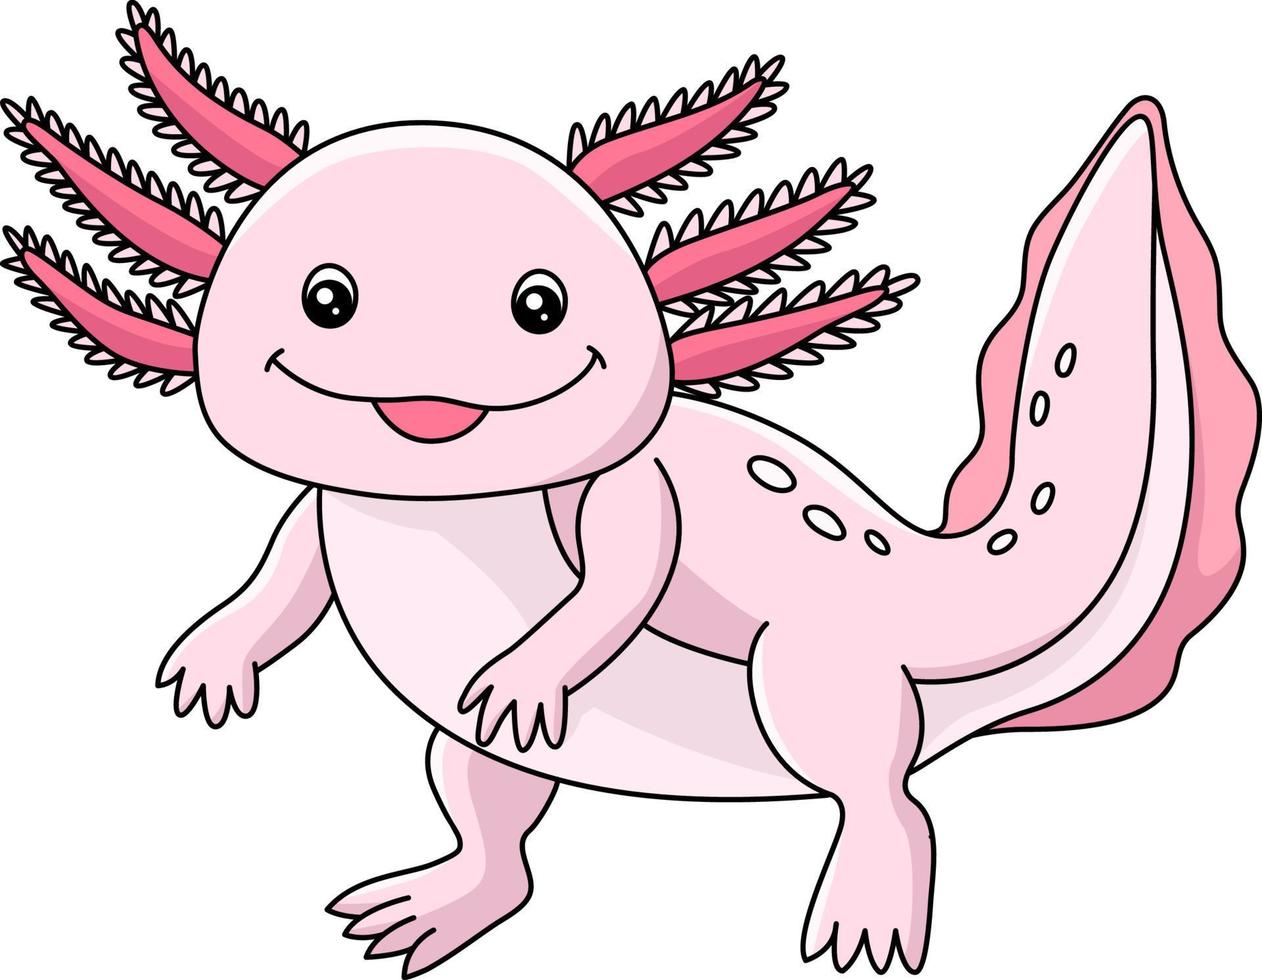 Axolotl Cartoon Colored Clipart Illustration vector